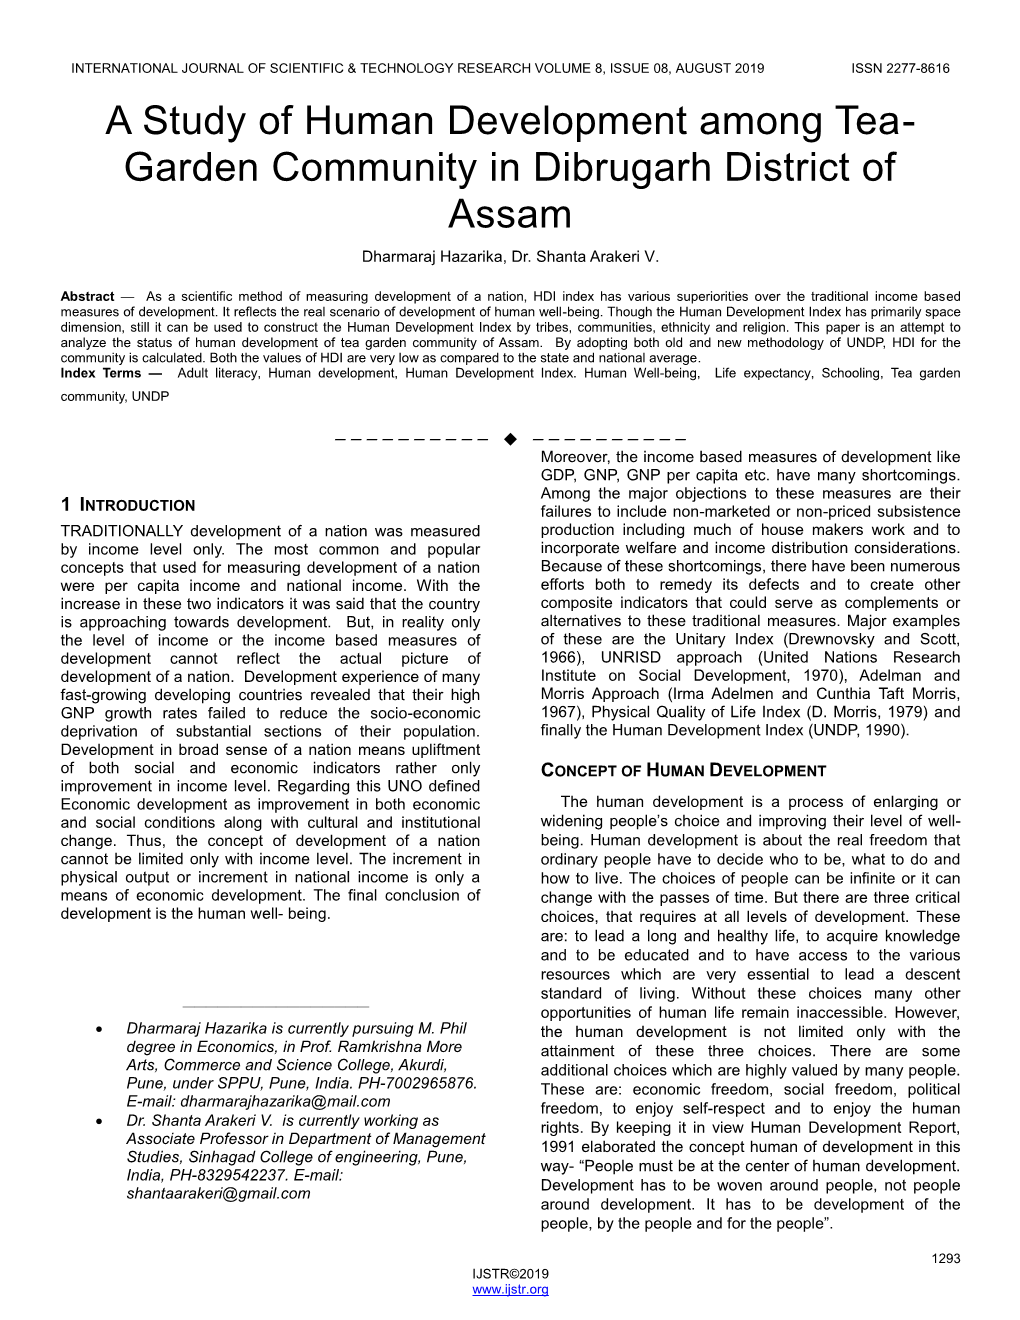 A Study of Human Development Among Tea- Garden Community in Dibrugarh District of Assam Dharmaraj Hazarika, Dr